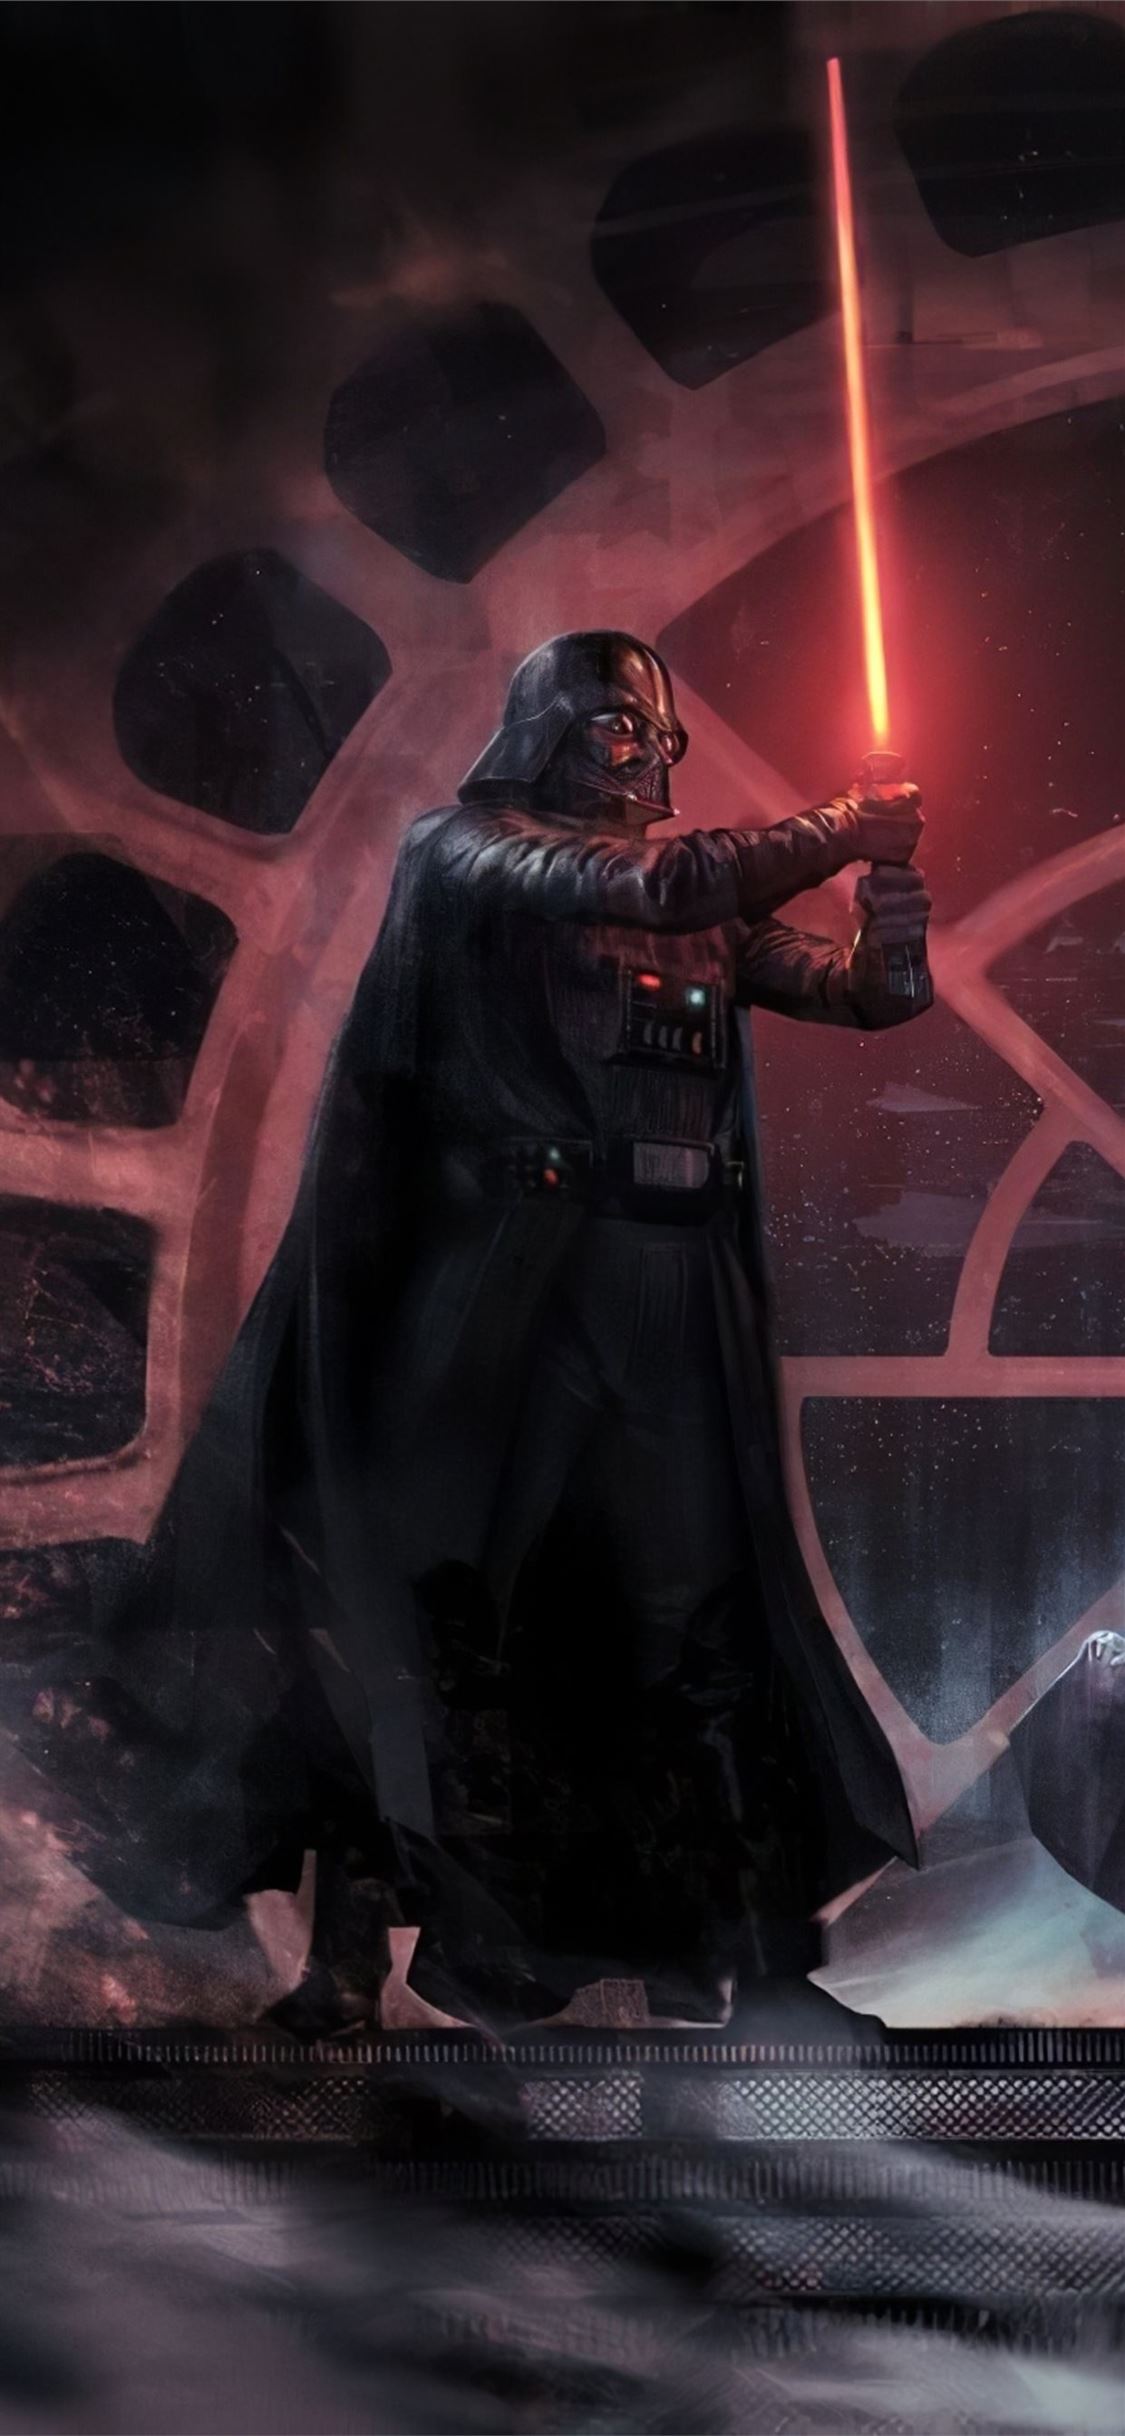 Darth Vader Vs Luke Skywalker iPhone X Wallpaper